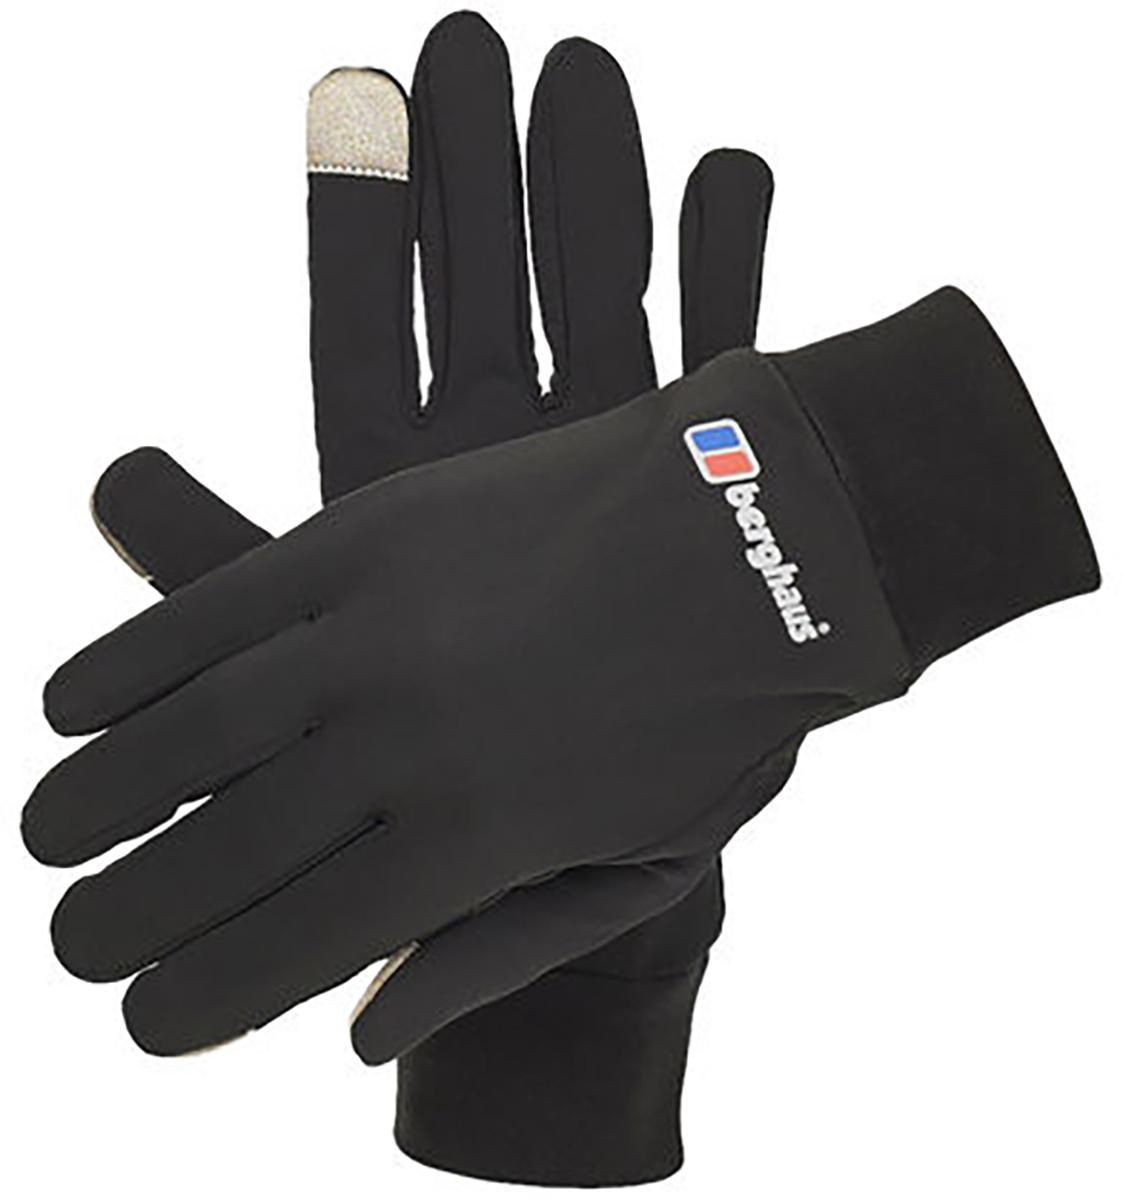 Berghaus Glove Liner - Black